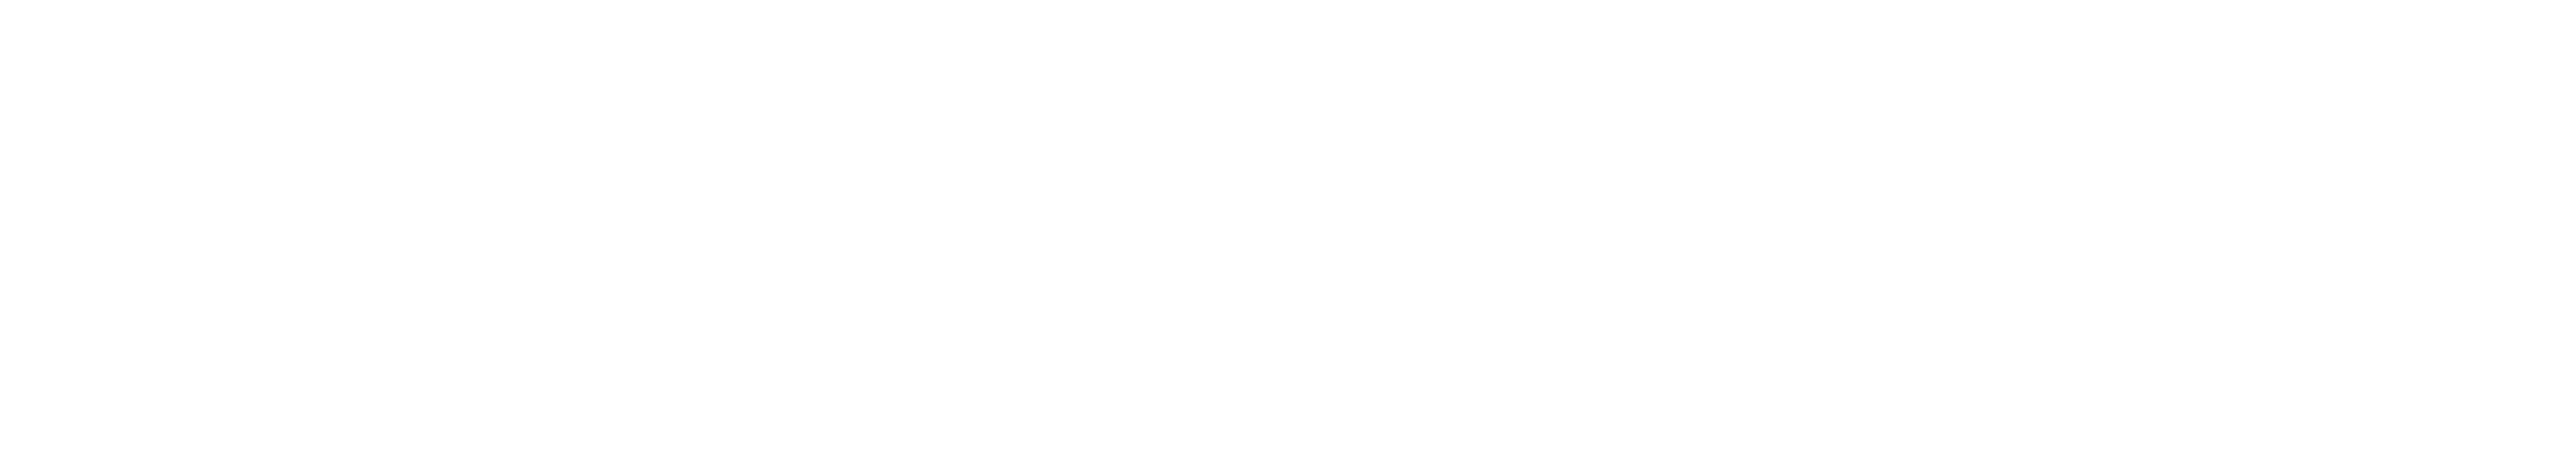 VitalSource logo